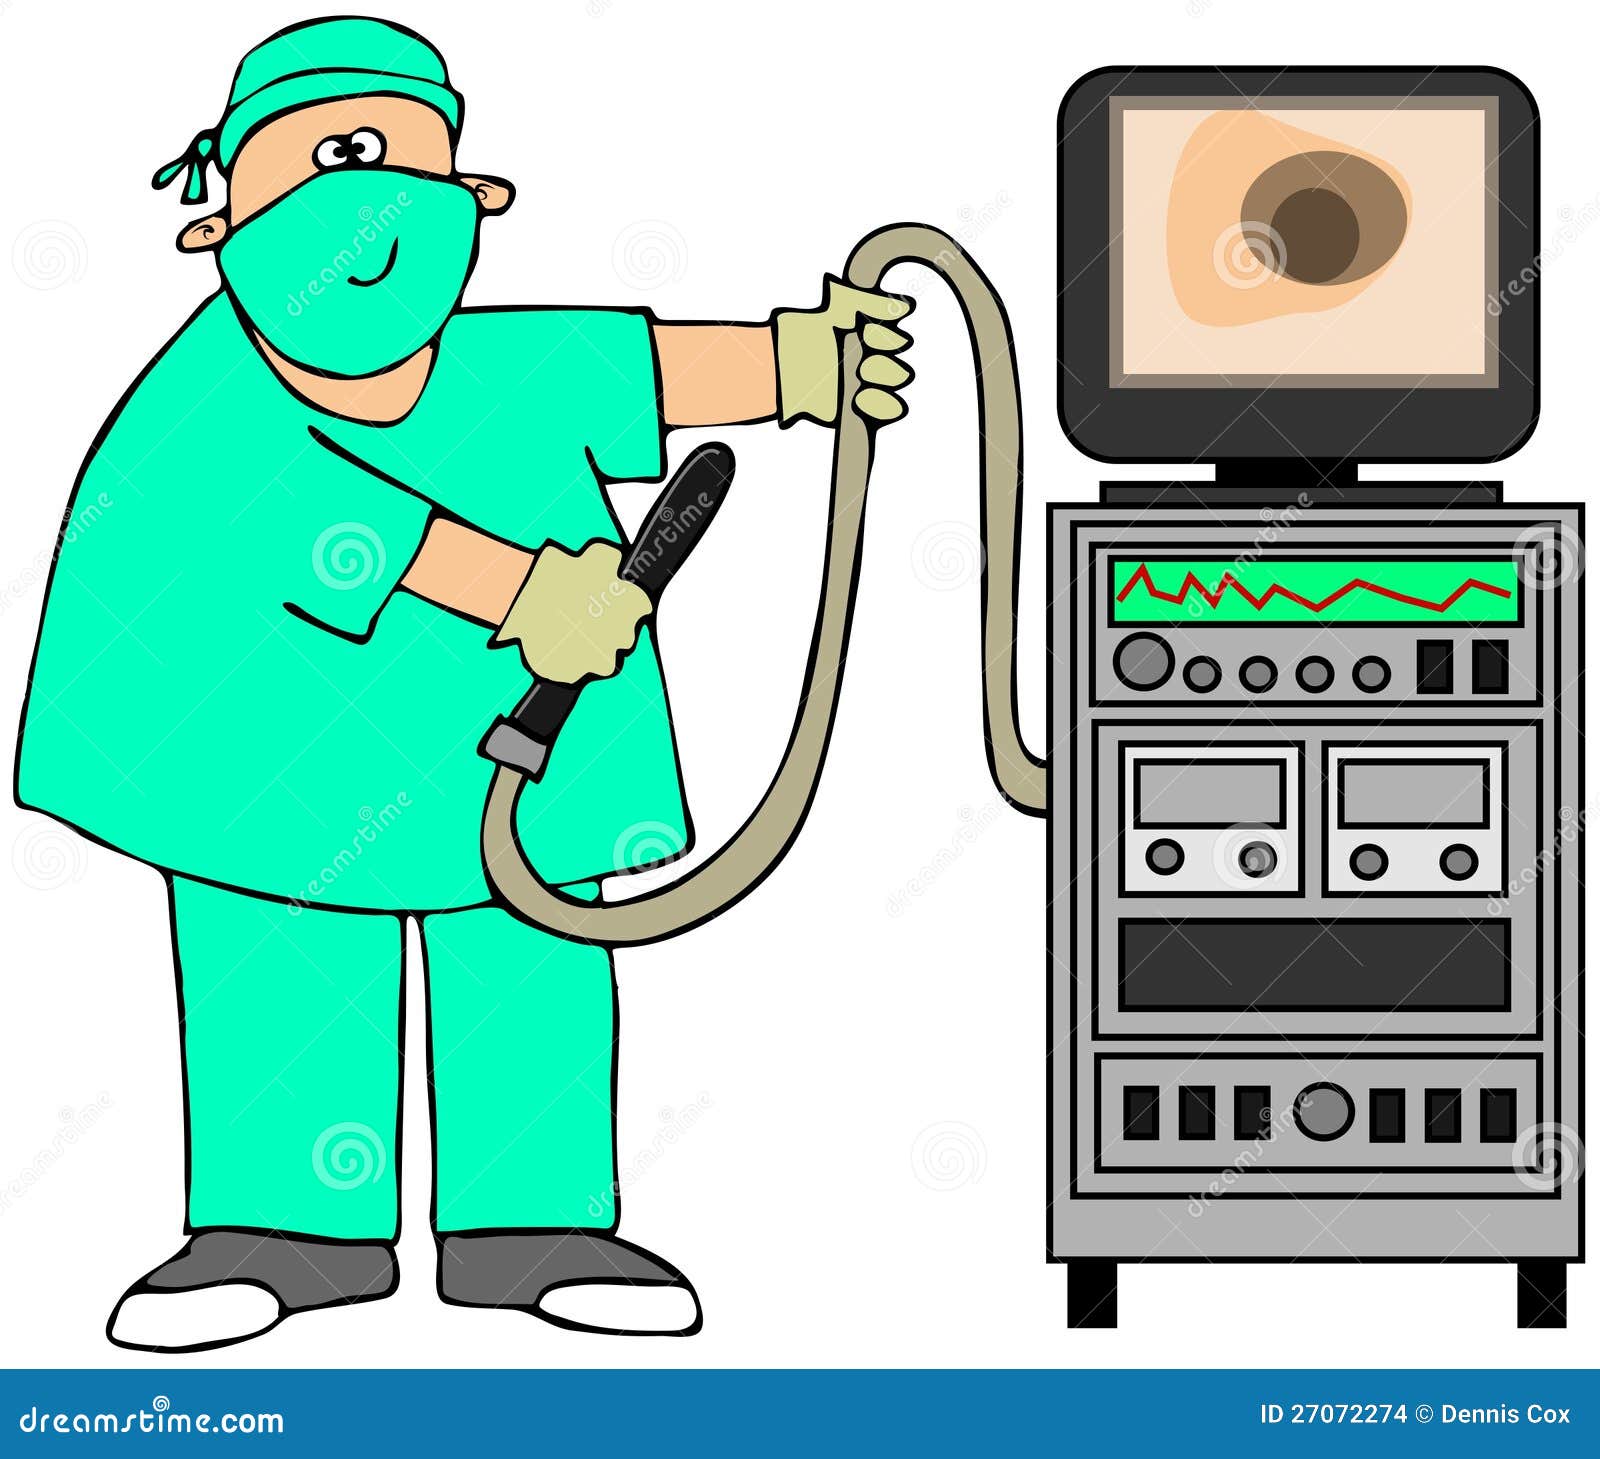 Proctologist stock illustration. Illustration of medical - 27072274